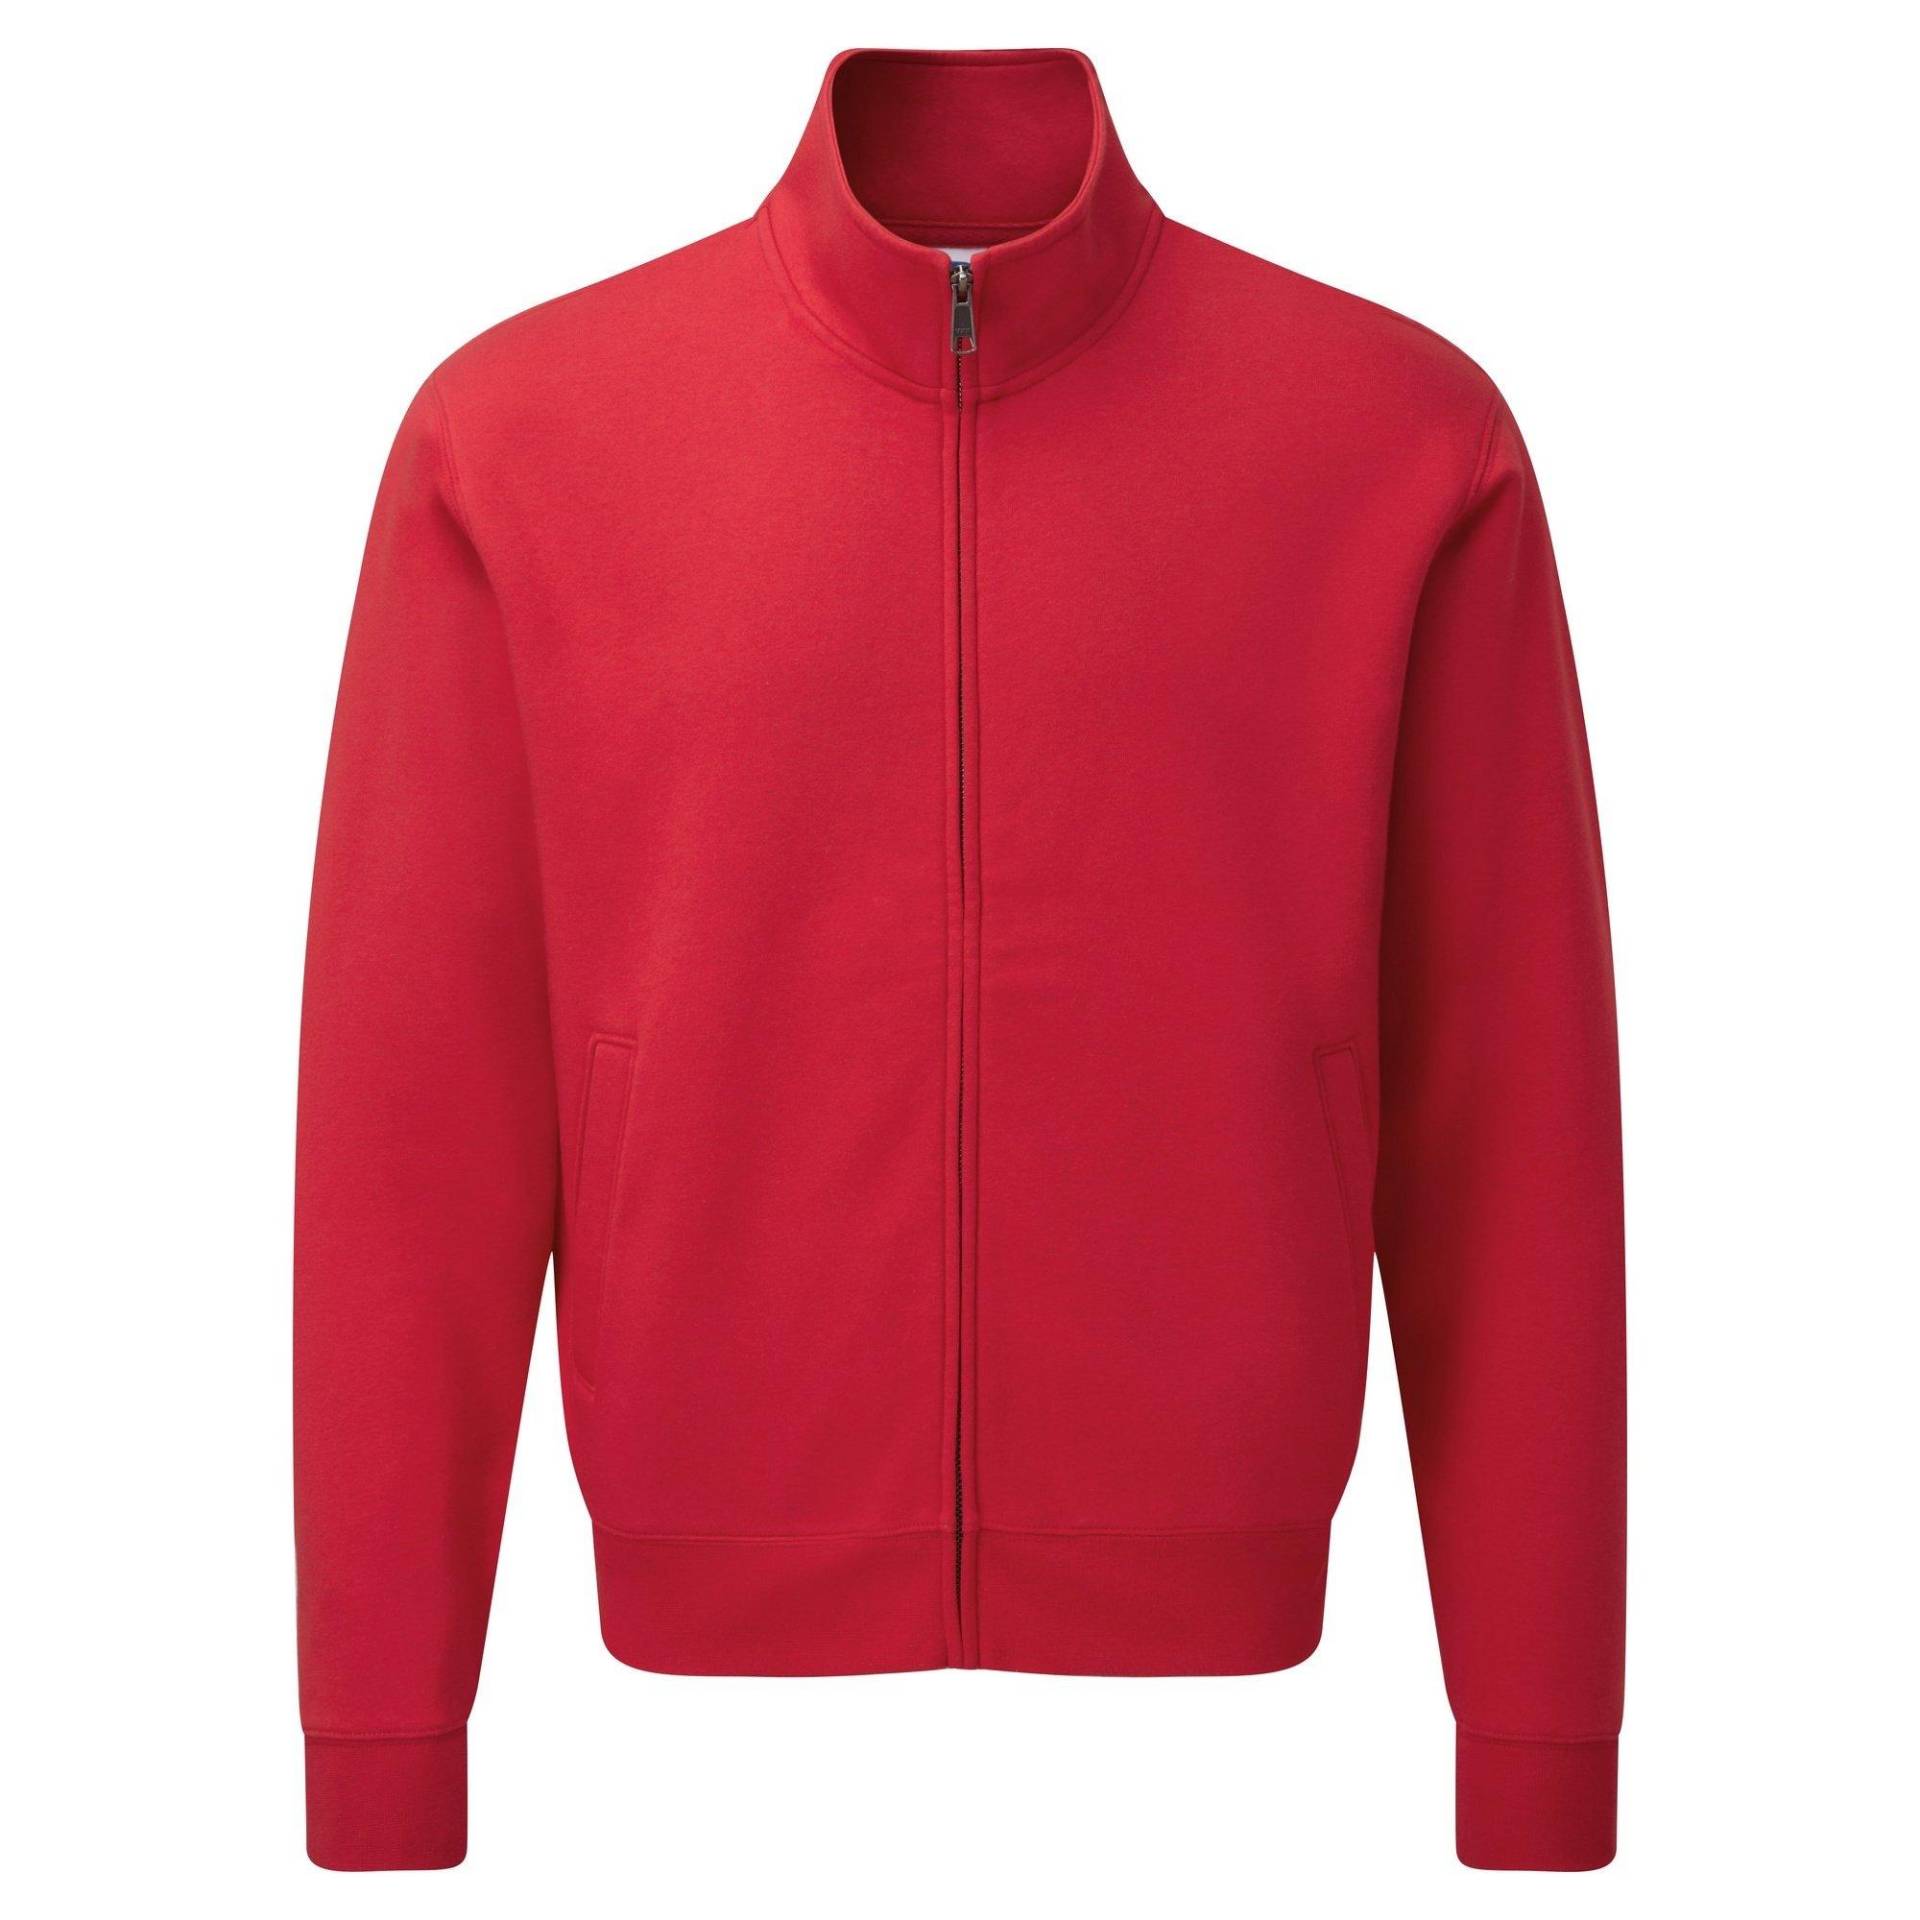 Authenitc Sweatshirt Jacke Herren Rot Bunt M von Russell